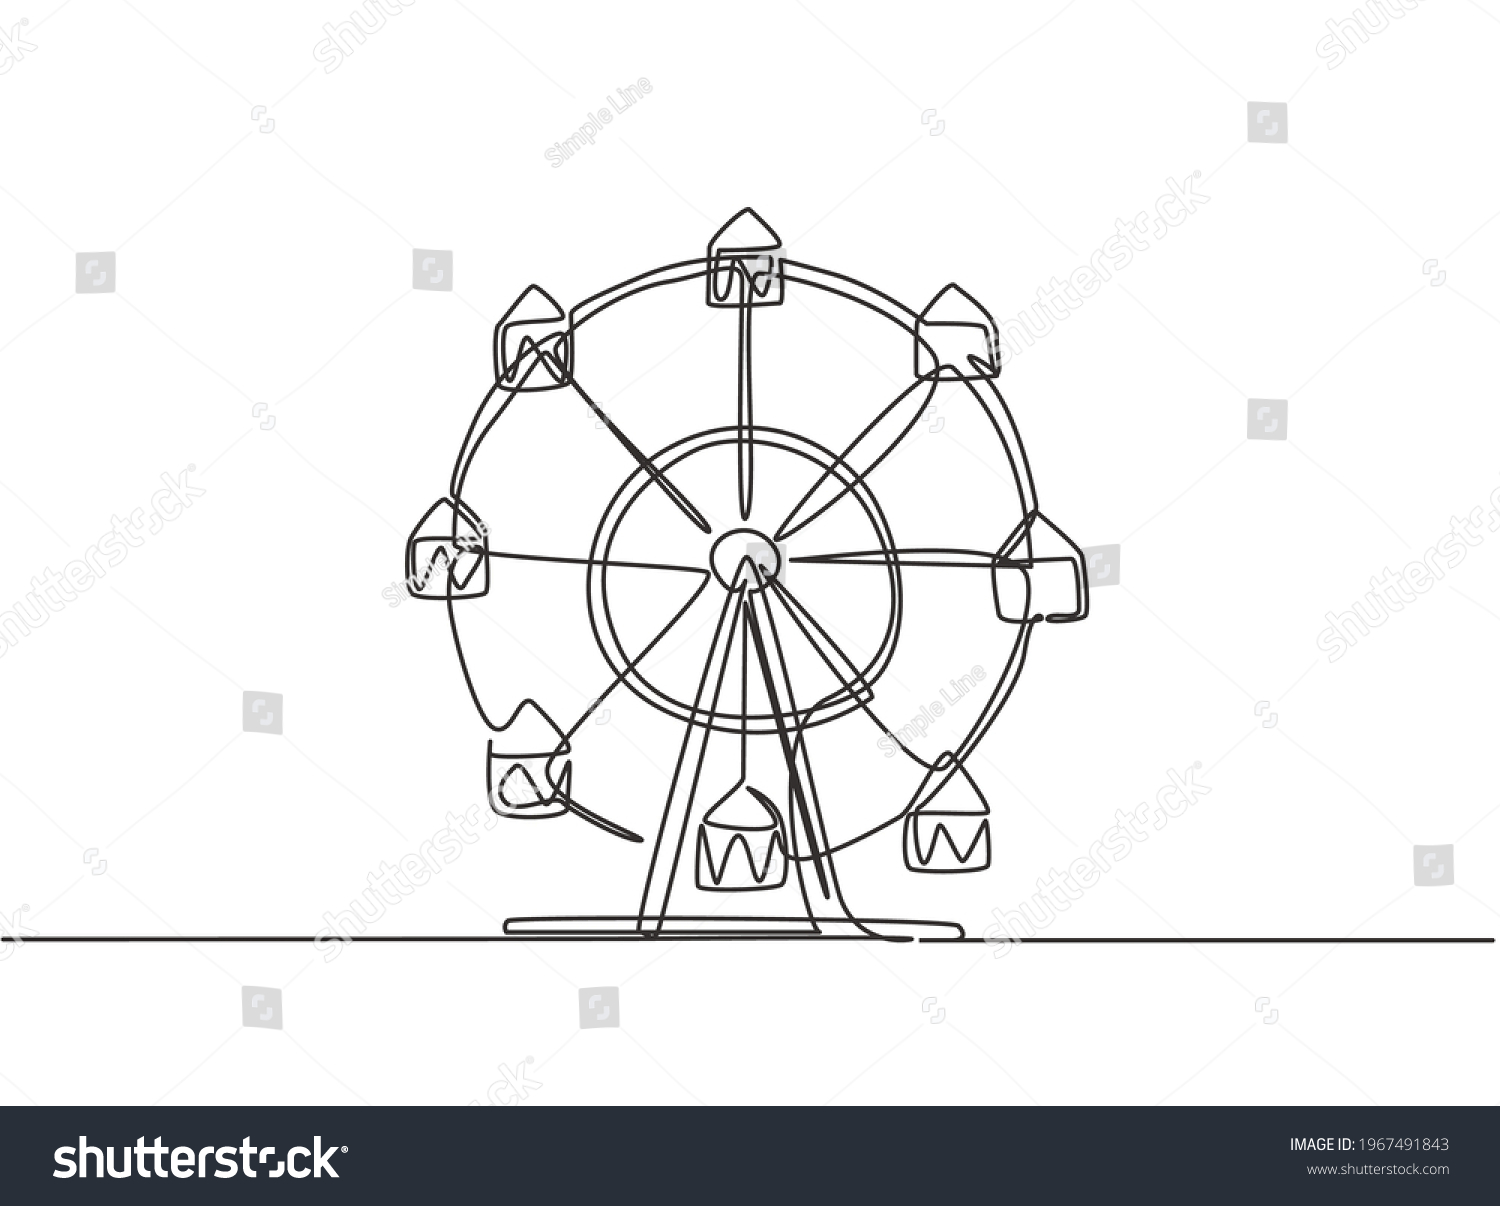 Ferris wheel line drawing stock photos